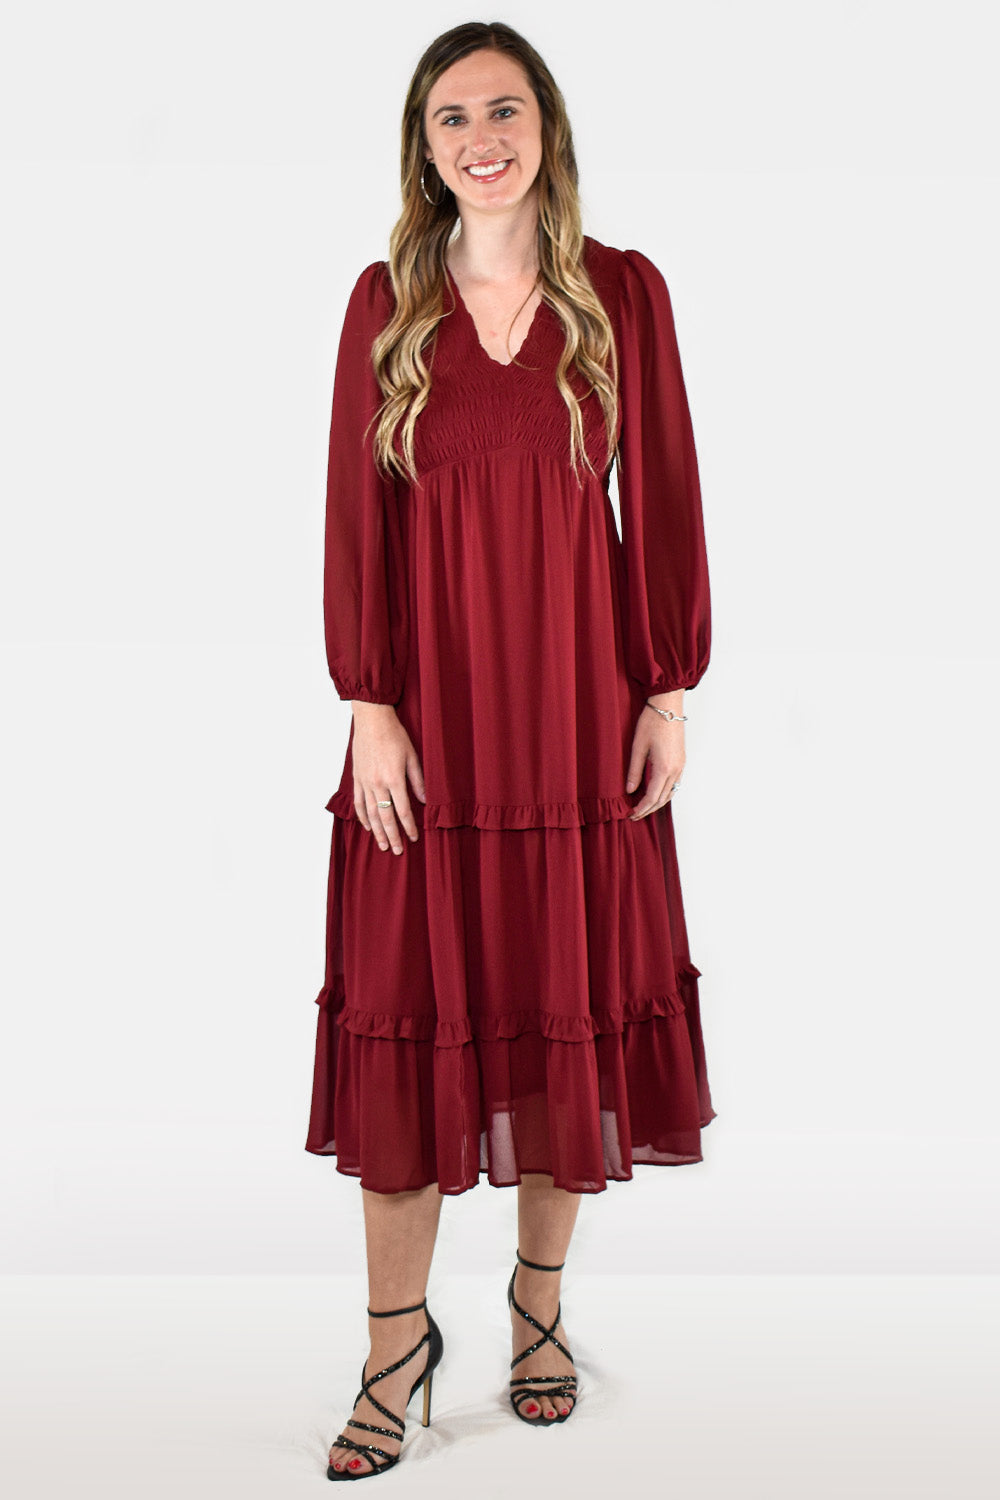 Burgundy Smocked Bodice Maxi Dress by Jodifl Clothing